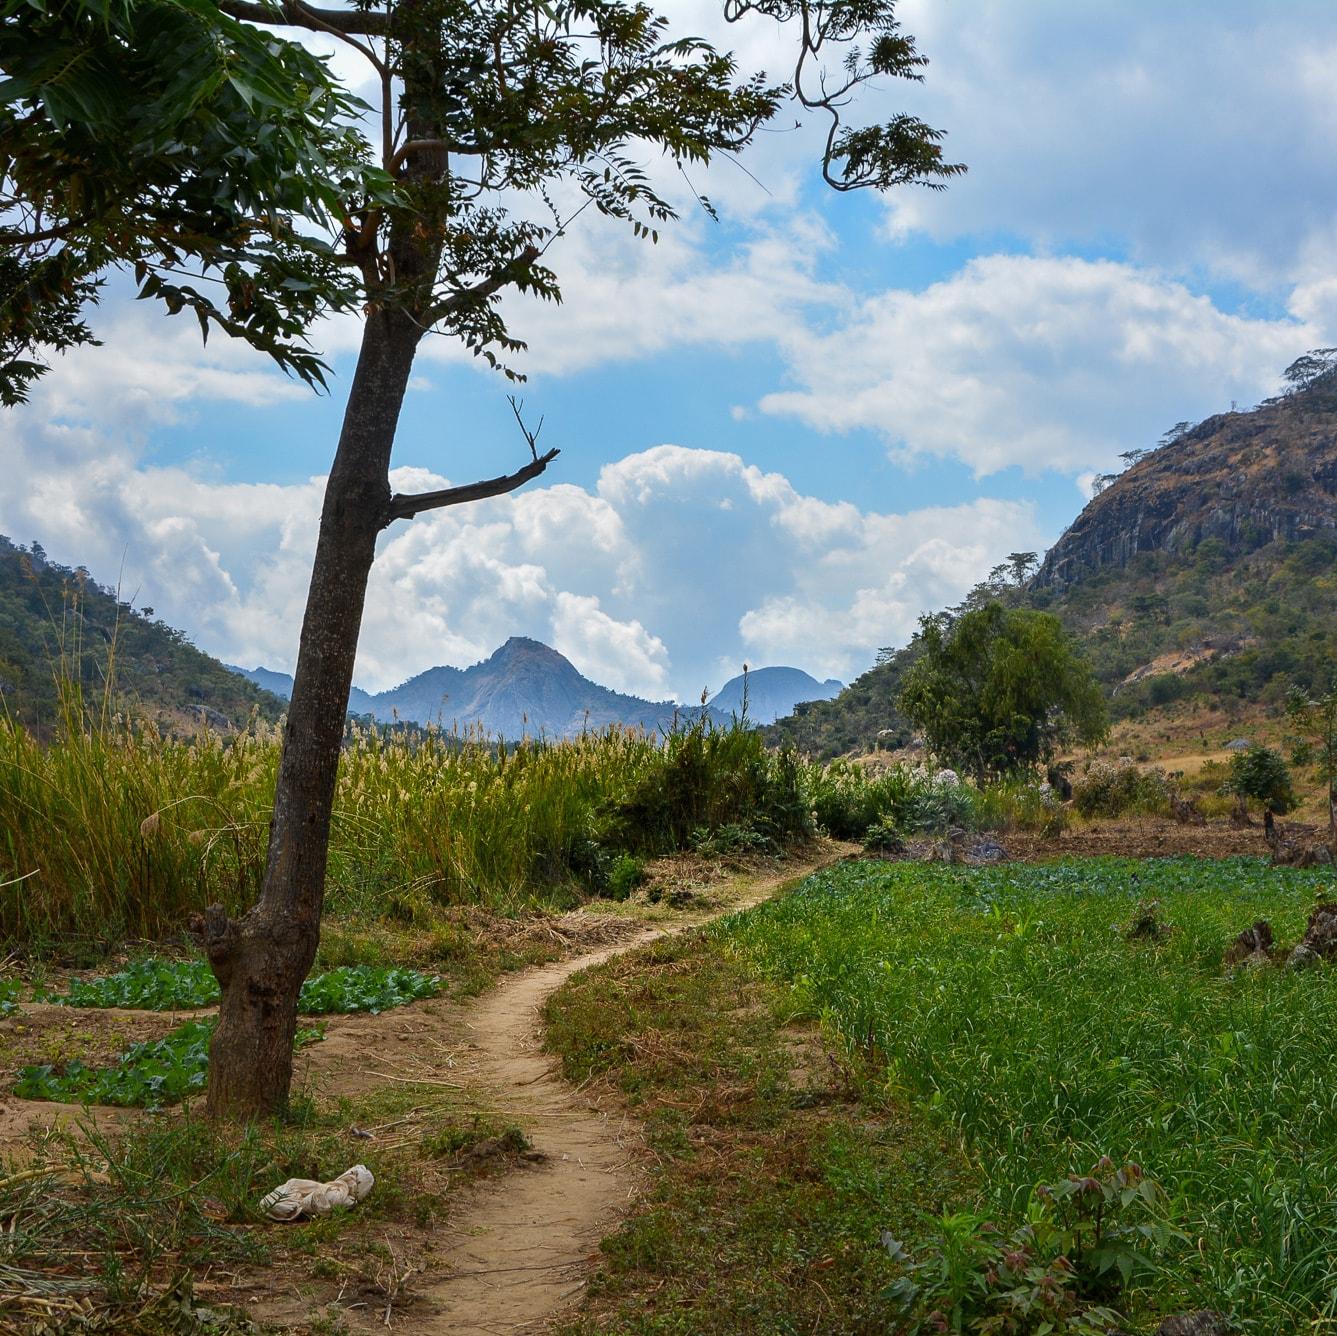 Scenery in Malawi